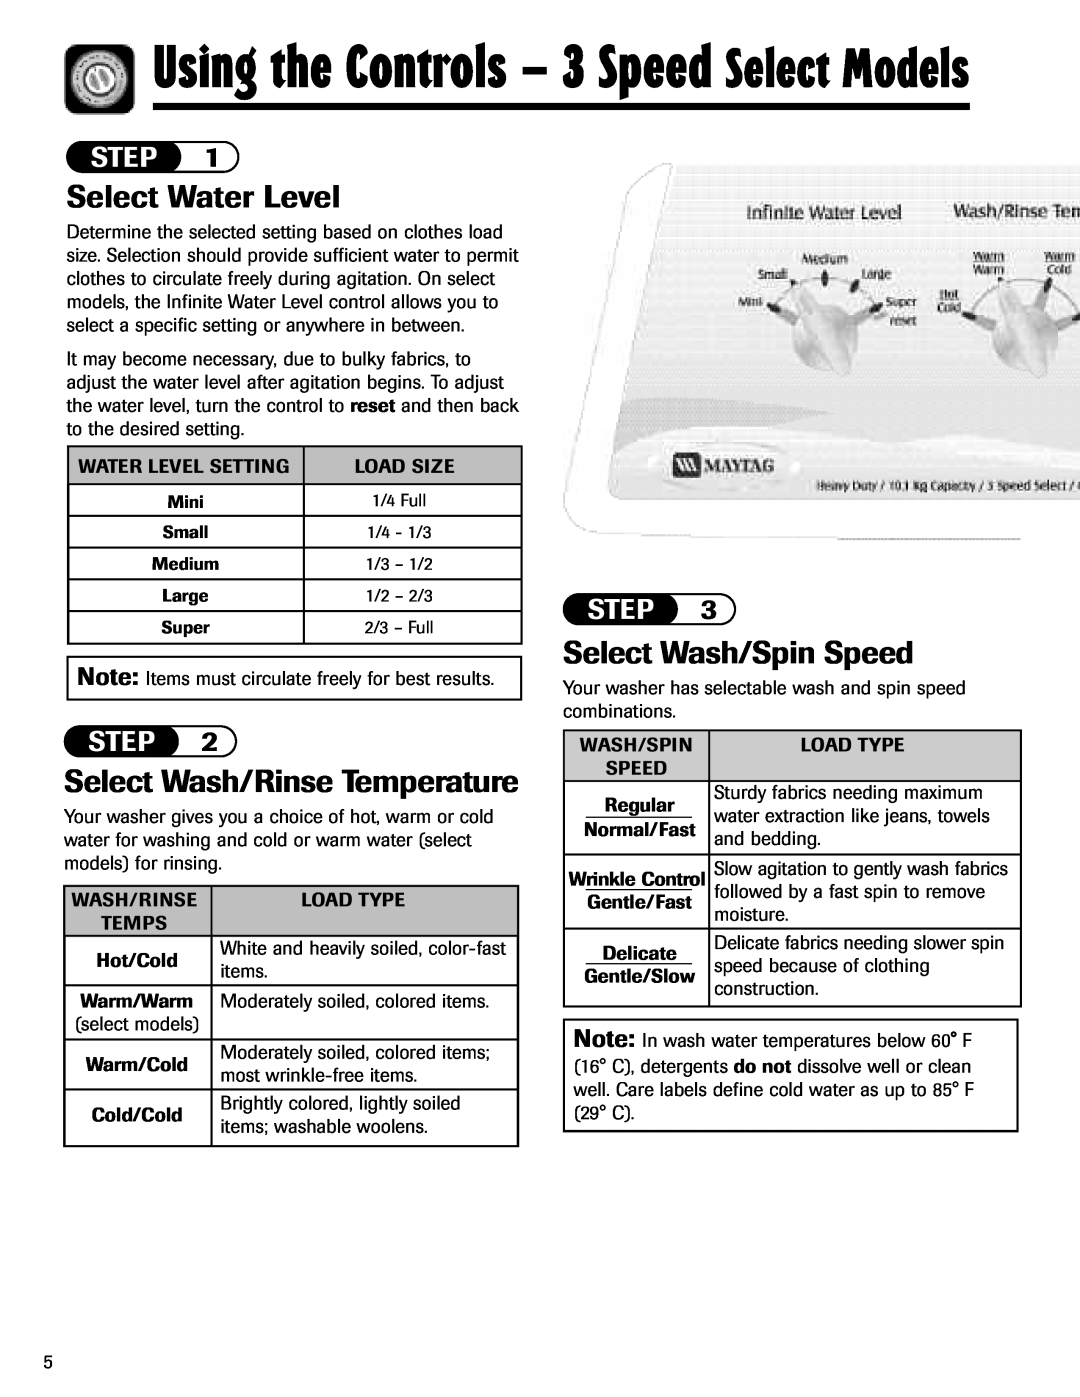 Maytag MAV-3 Using the Controls - 3 Speed Select Models, Select Water Level, Select Wash/Rinse Temperature, Step 